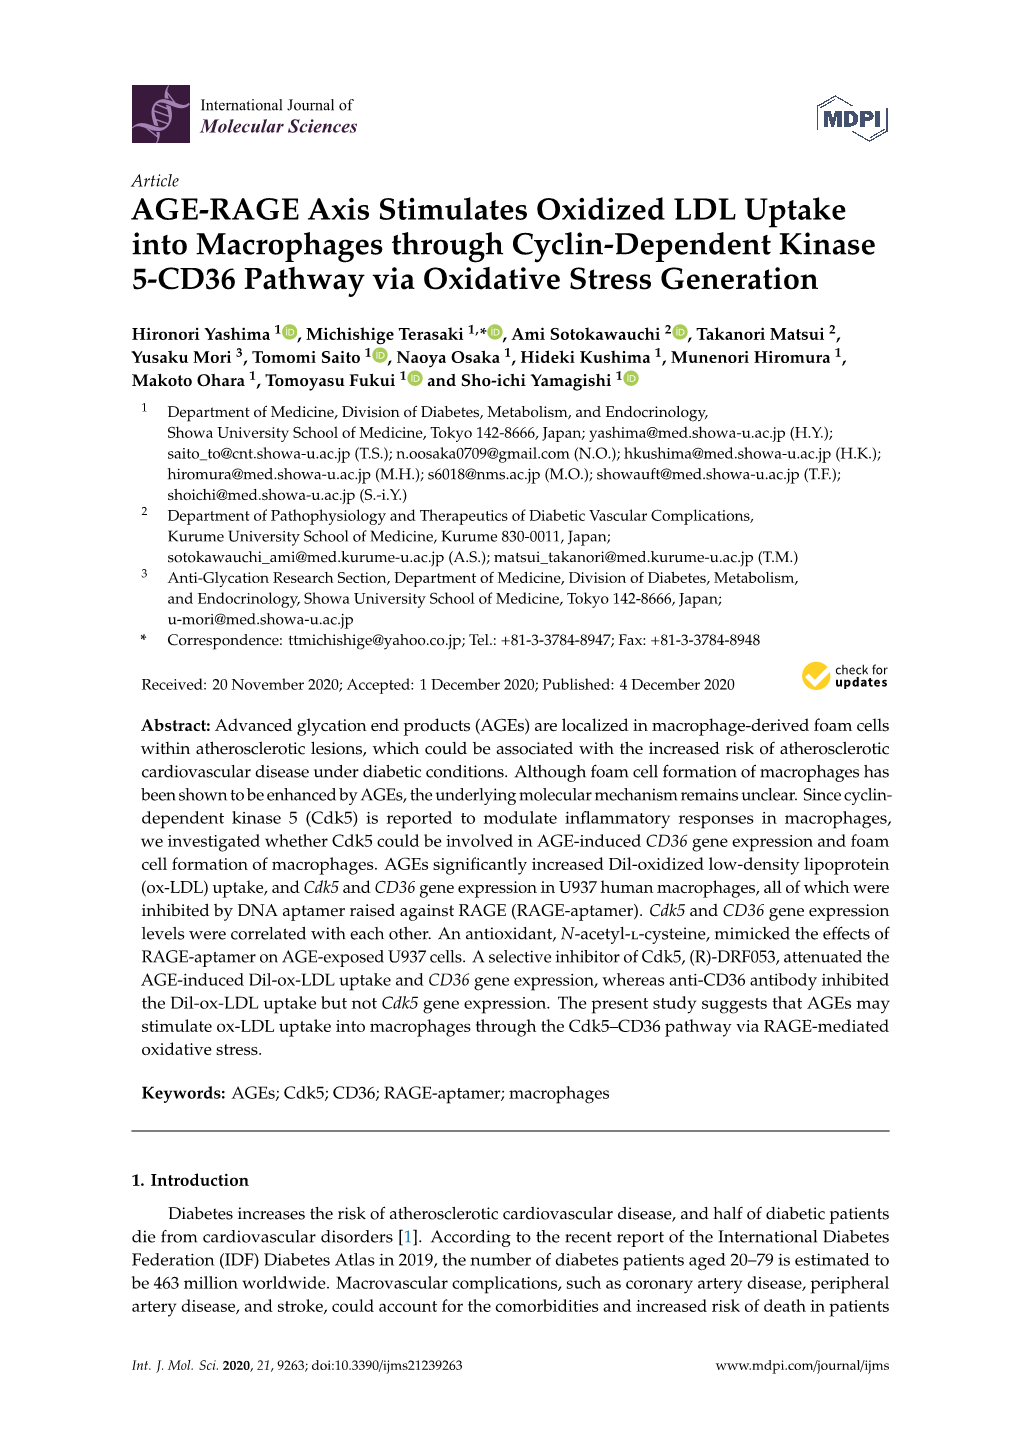 AGE-RAGE Axis Stimulates Oxidized LDL Uptake Into Macrophages Through Cyclin-Dependent Kinase 5-CD36 Pathway Via Oxidative Stress Generation